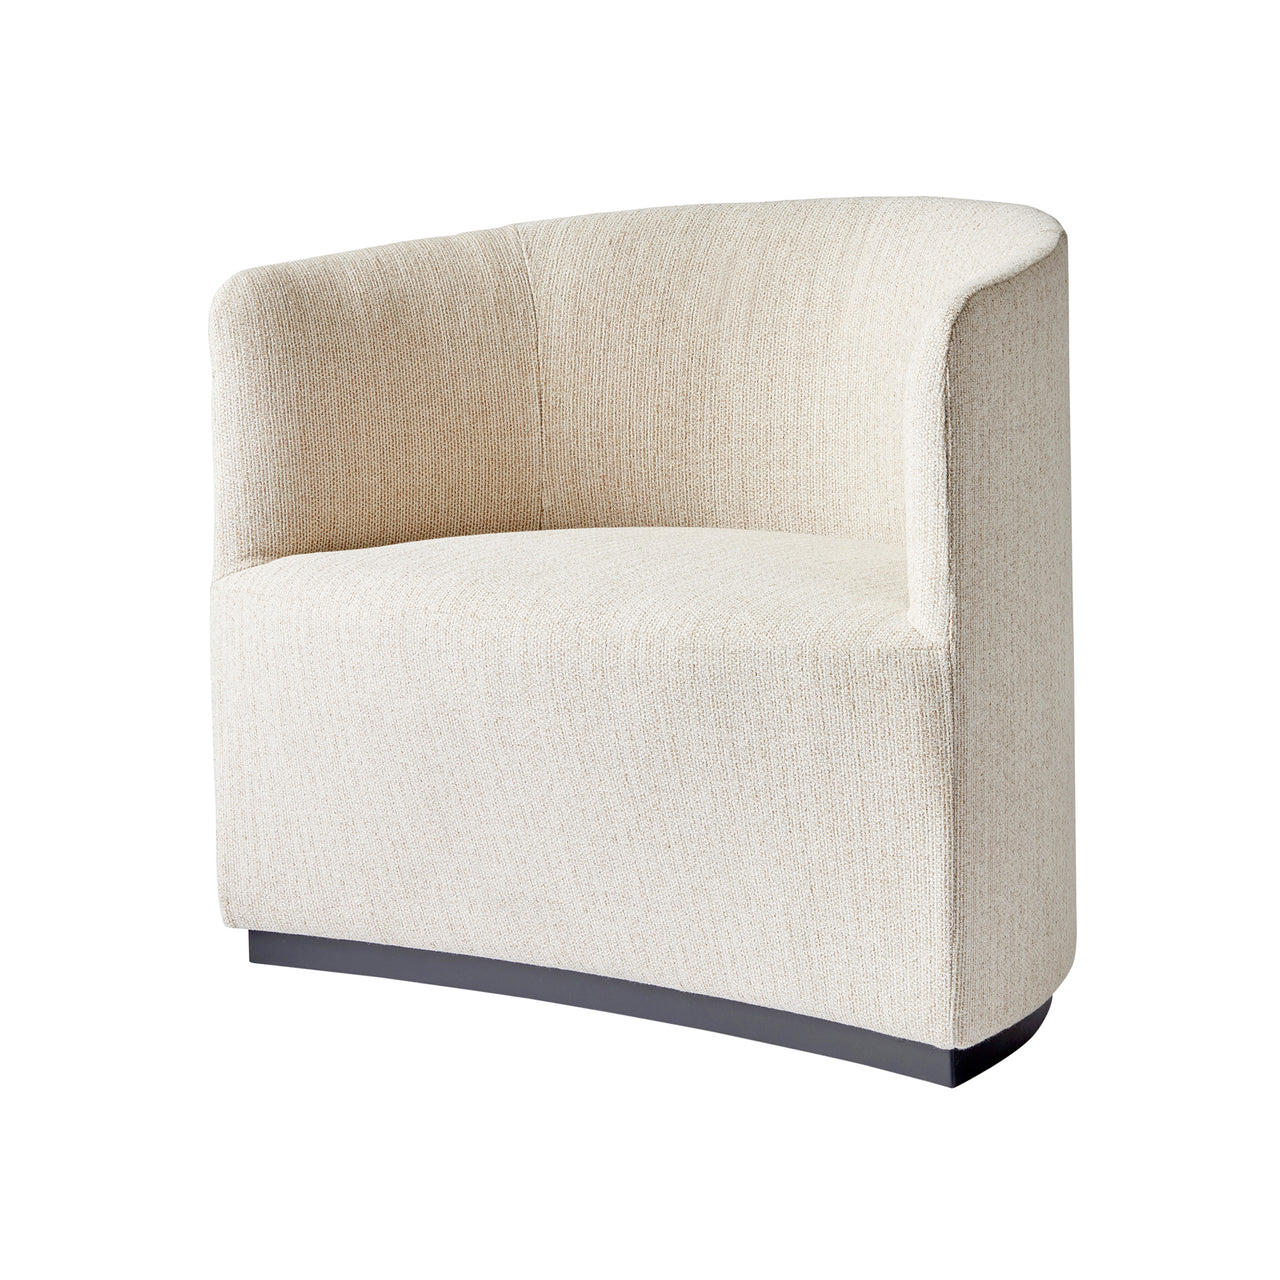 Tearoom Lounge Chair: Savanna 202